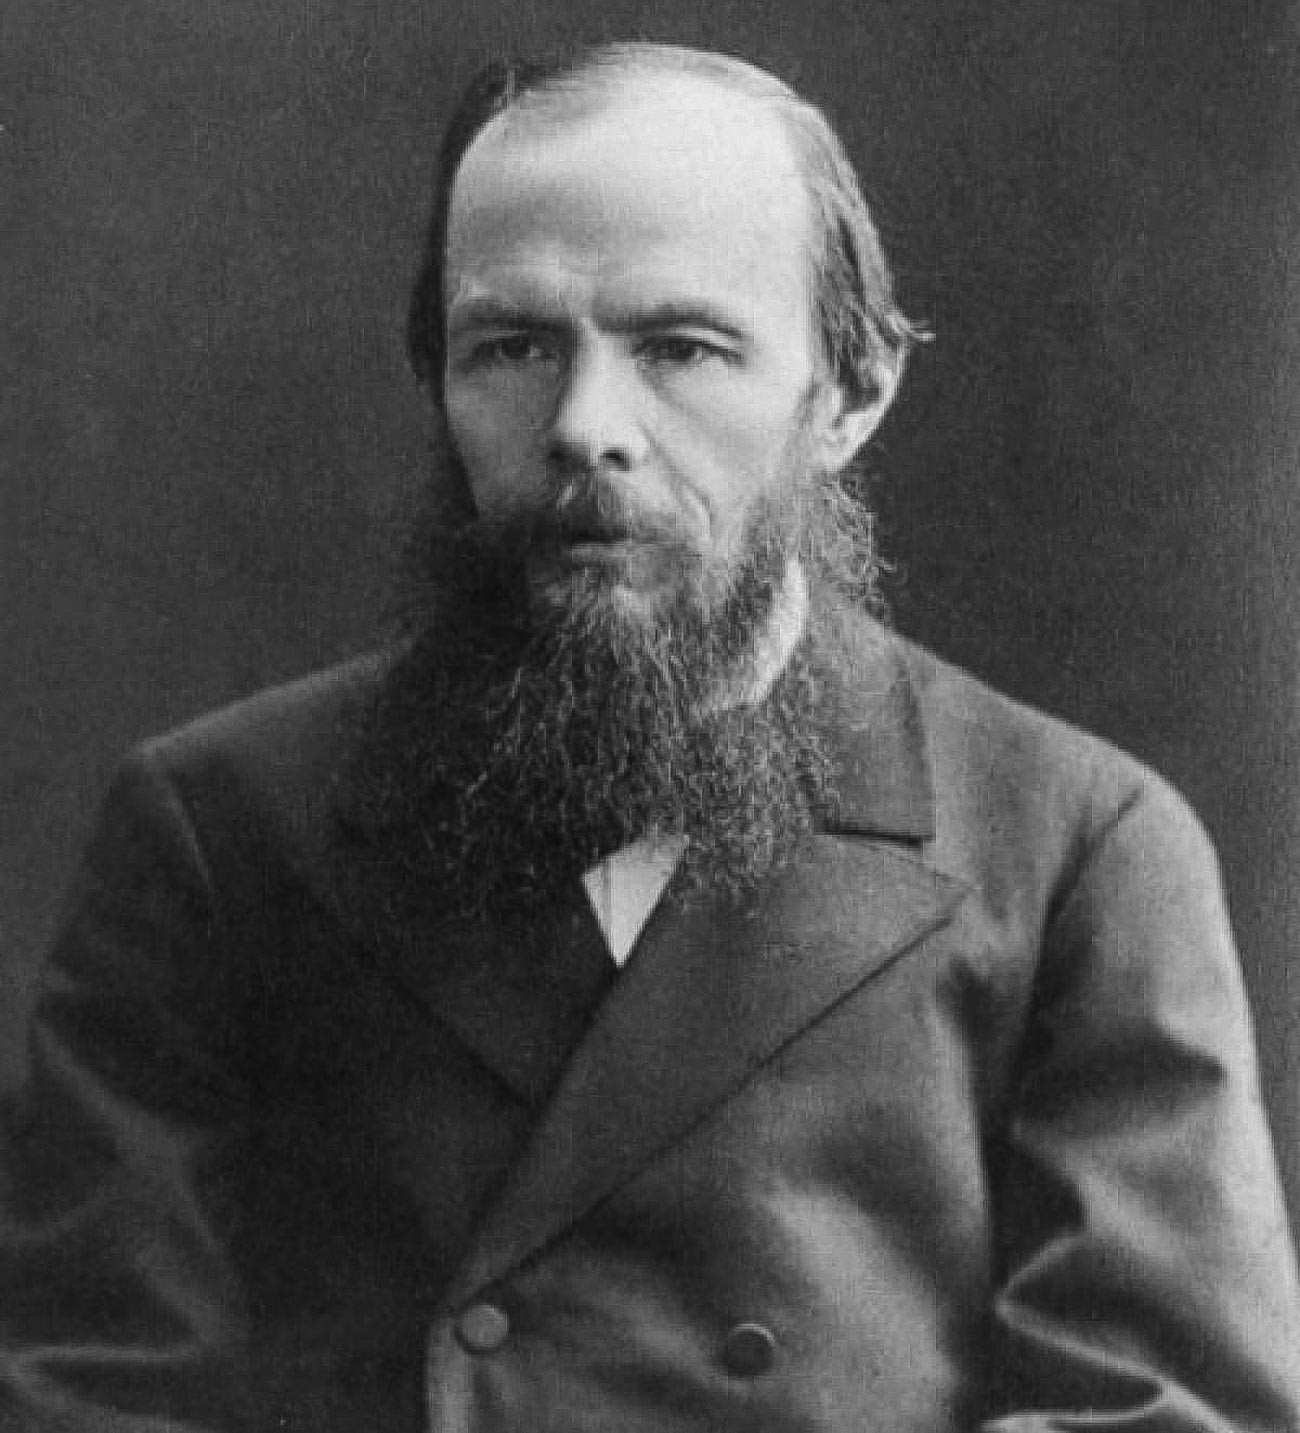 Fiódor Dostoievski